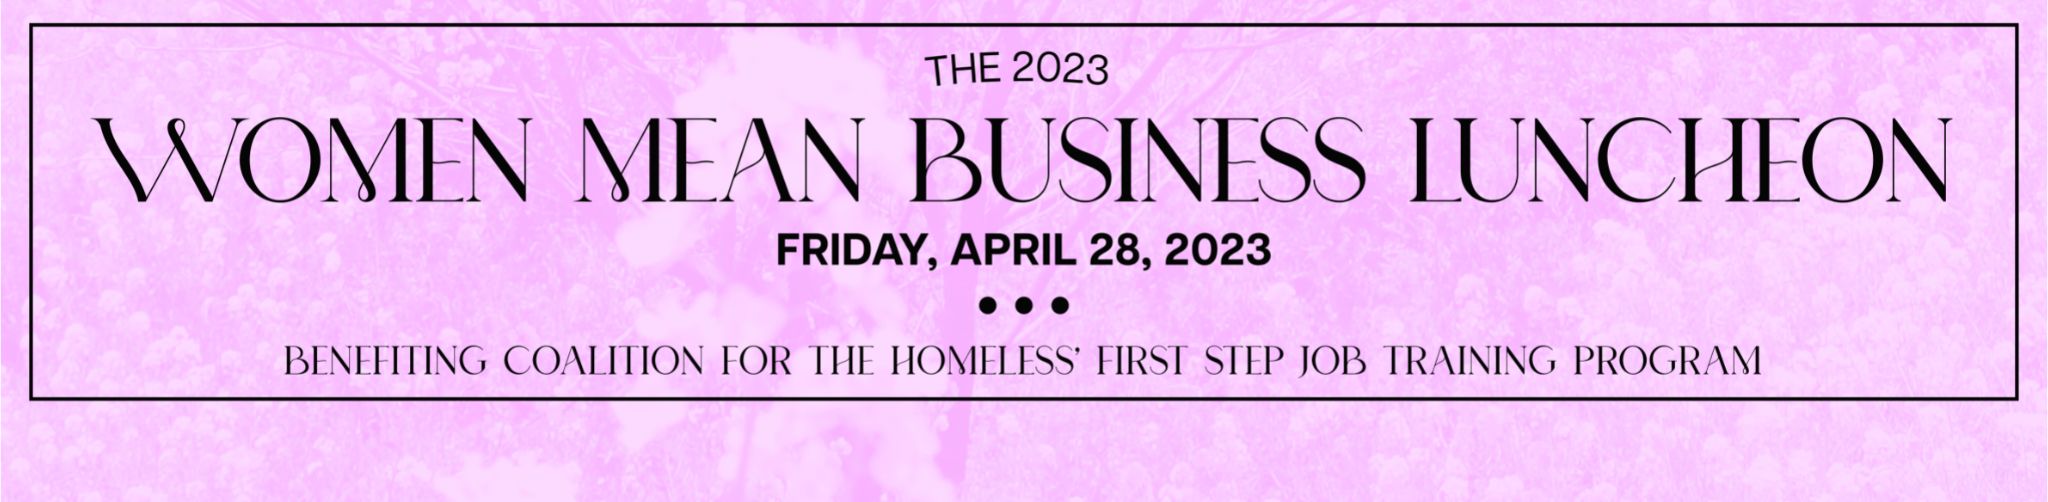 Women Mean Business Luncheon 2023